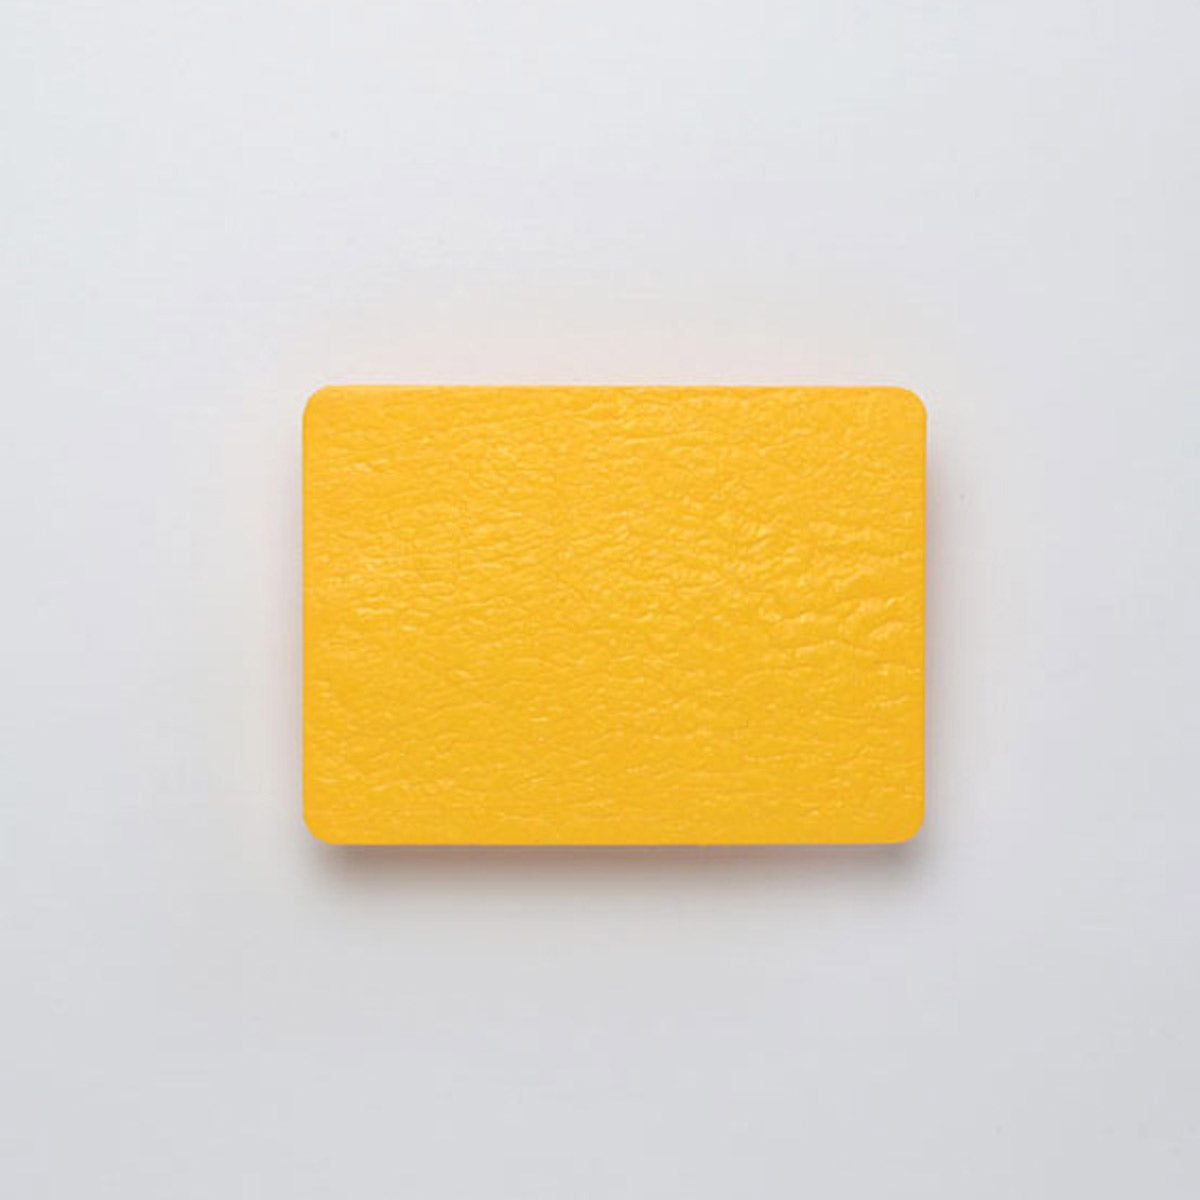 PE CARD HOLDER / Yellow